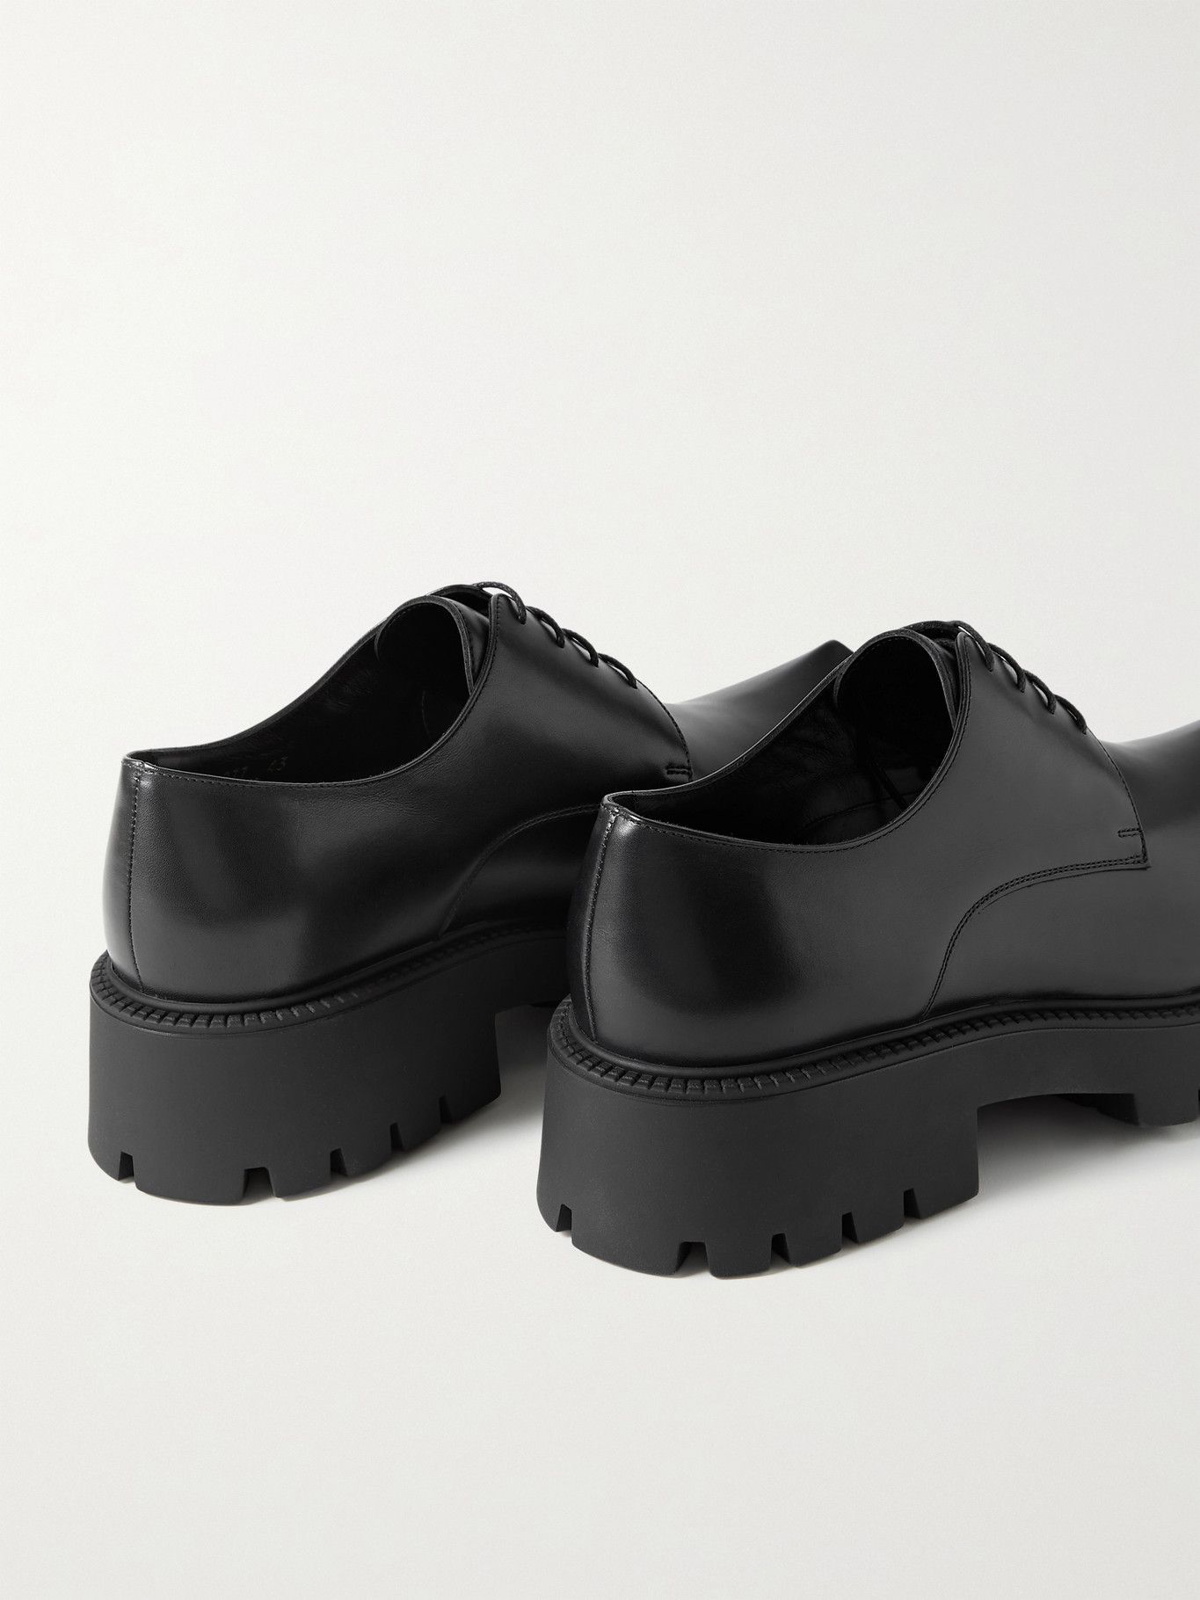 BALENCIAGA - Rhino Leather Derby Shoes - Black Balenciaga